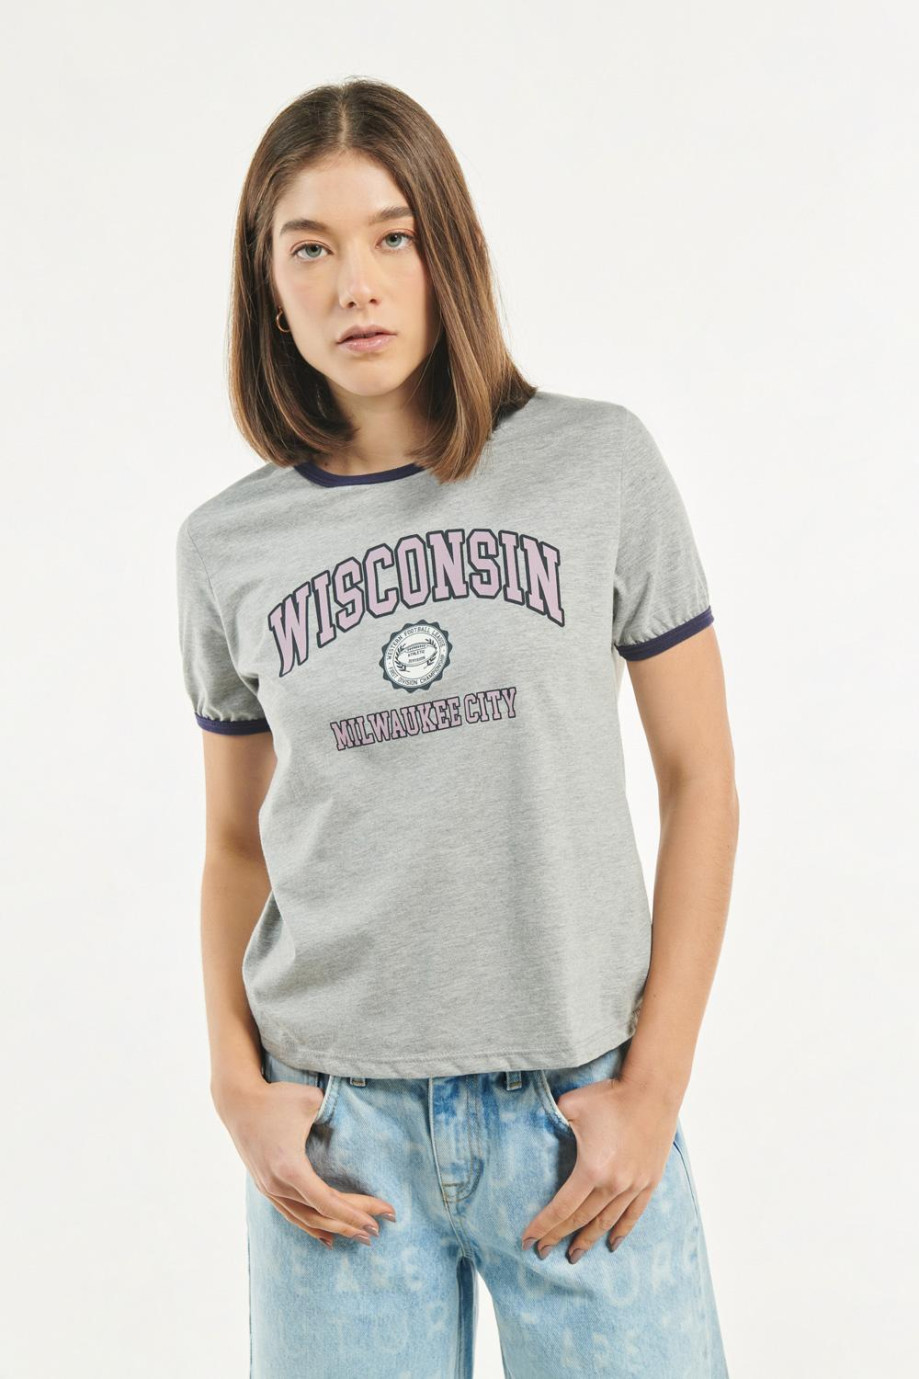 Camiseta manga corta gris clara con diseño college de Wisconsin